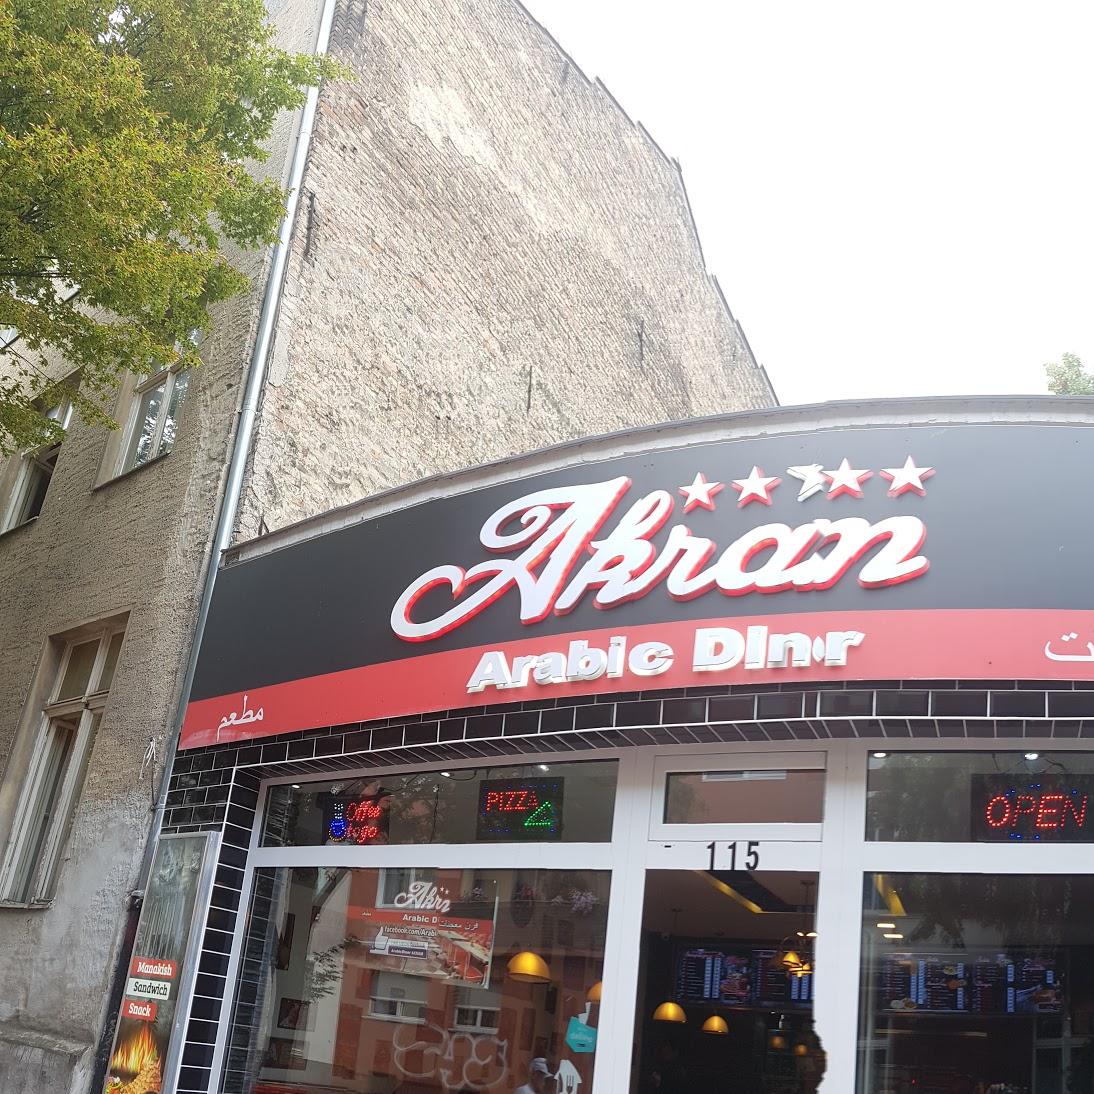 Restaurant "Arabic Diner AKRAM" in Berlin